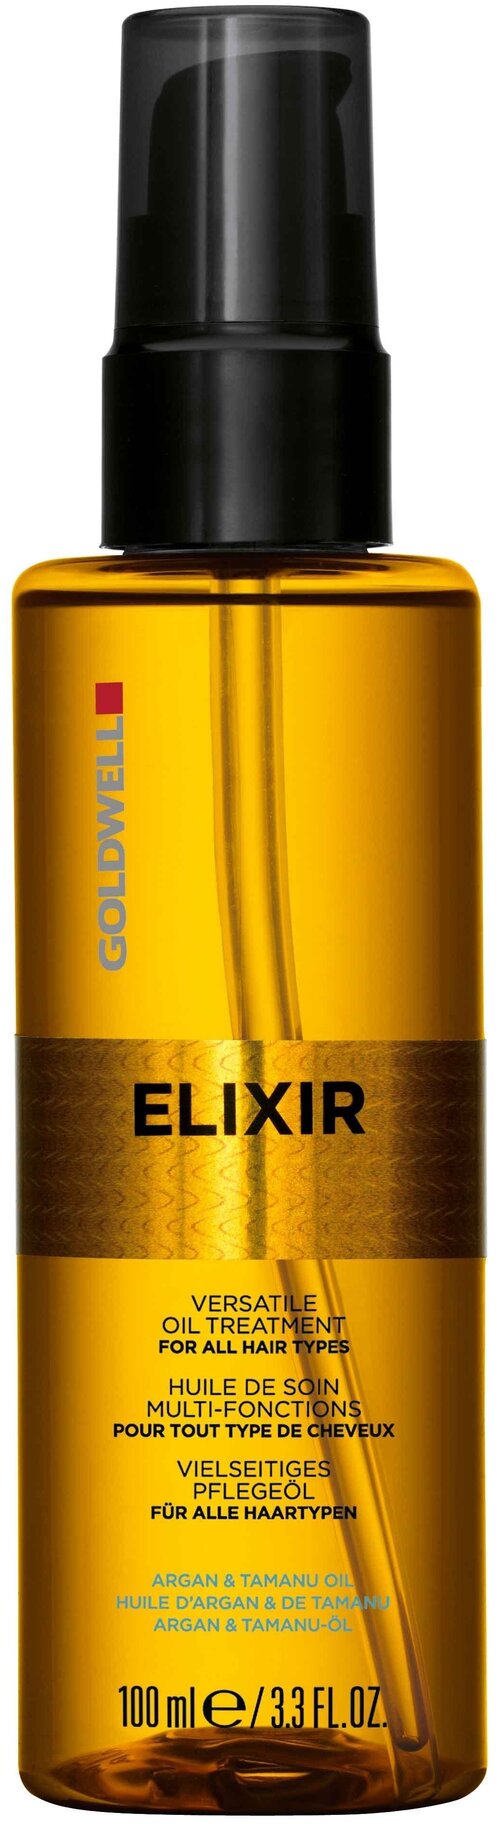 Goldwell ELIXIR Масло-уход для всех типов волос, 100 мл, бутылка